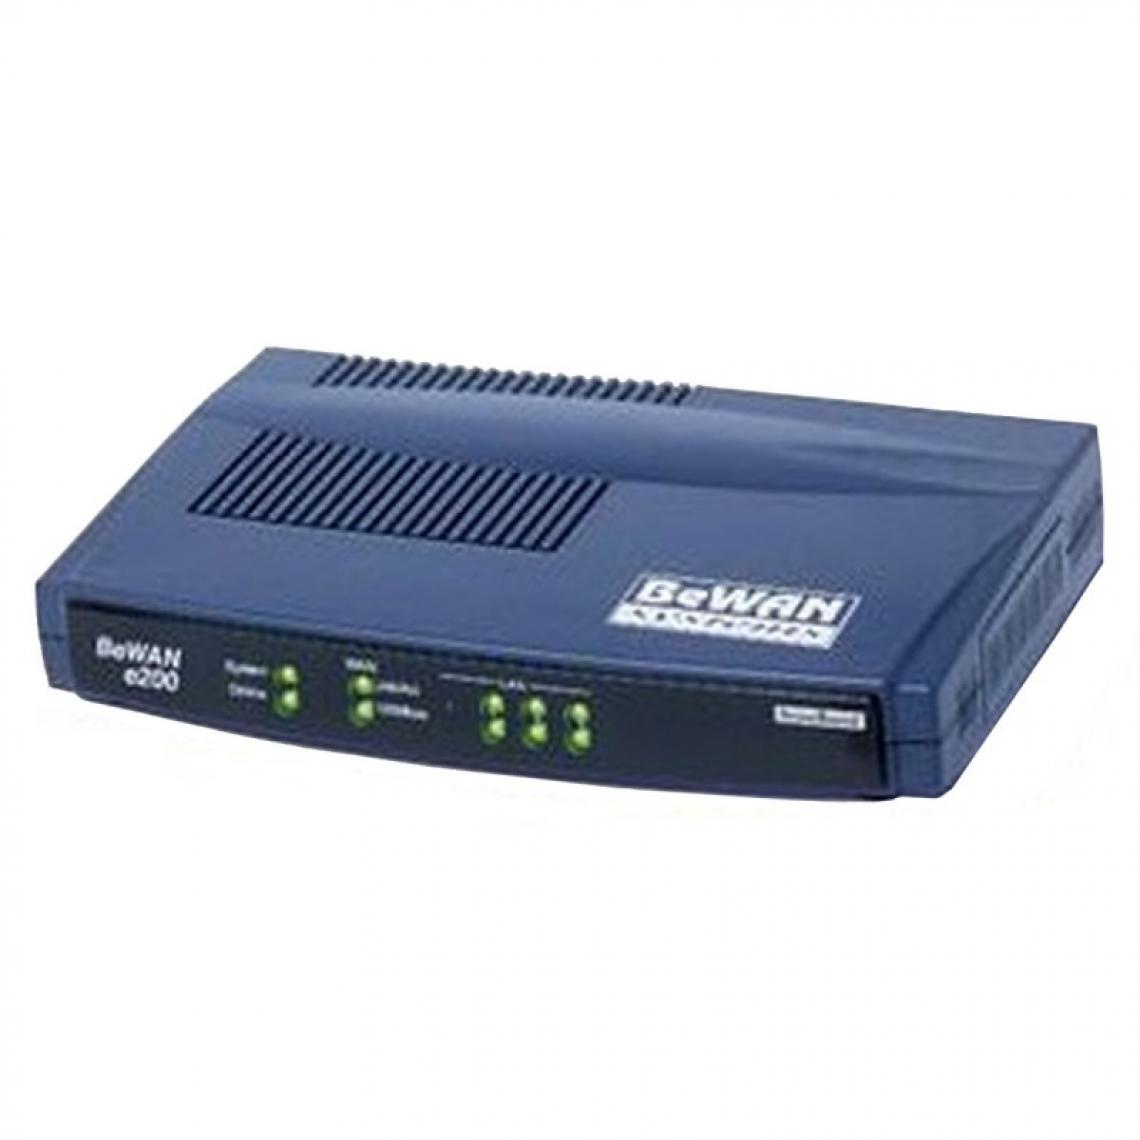 Bewan - Routeur Firewall BeWAN BWA-e200 4x RJ-45 10/100 Plug & Play NEUF - Modem / Routeur / Points d'accès